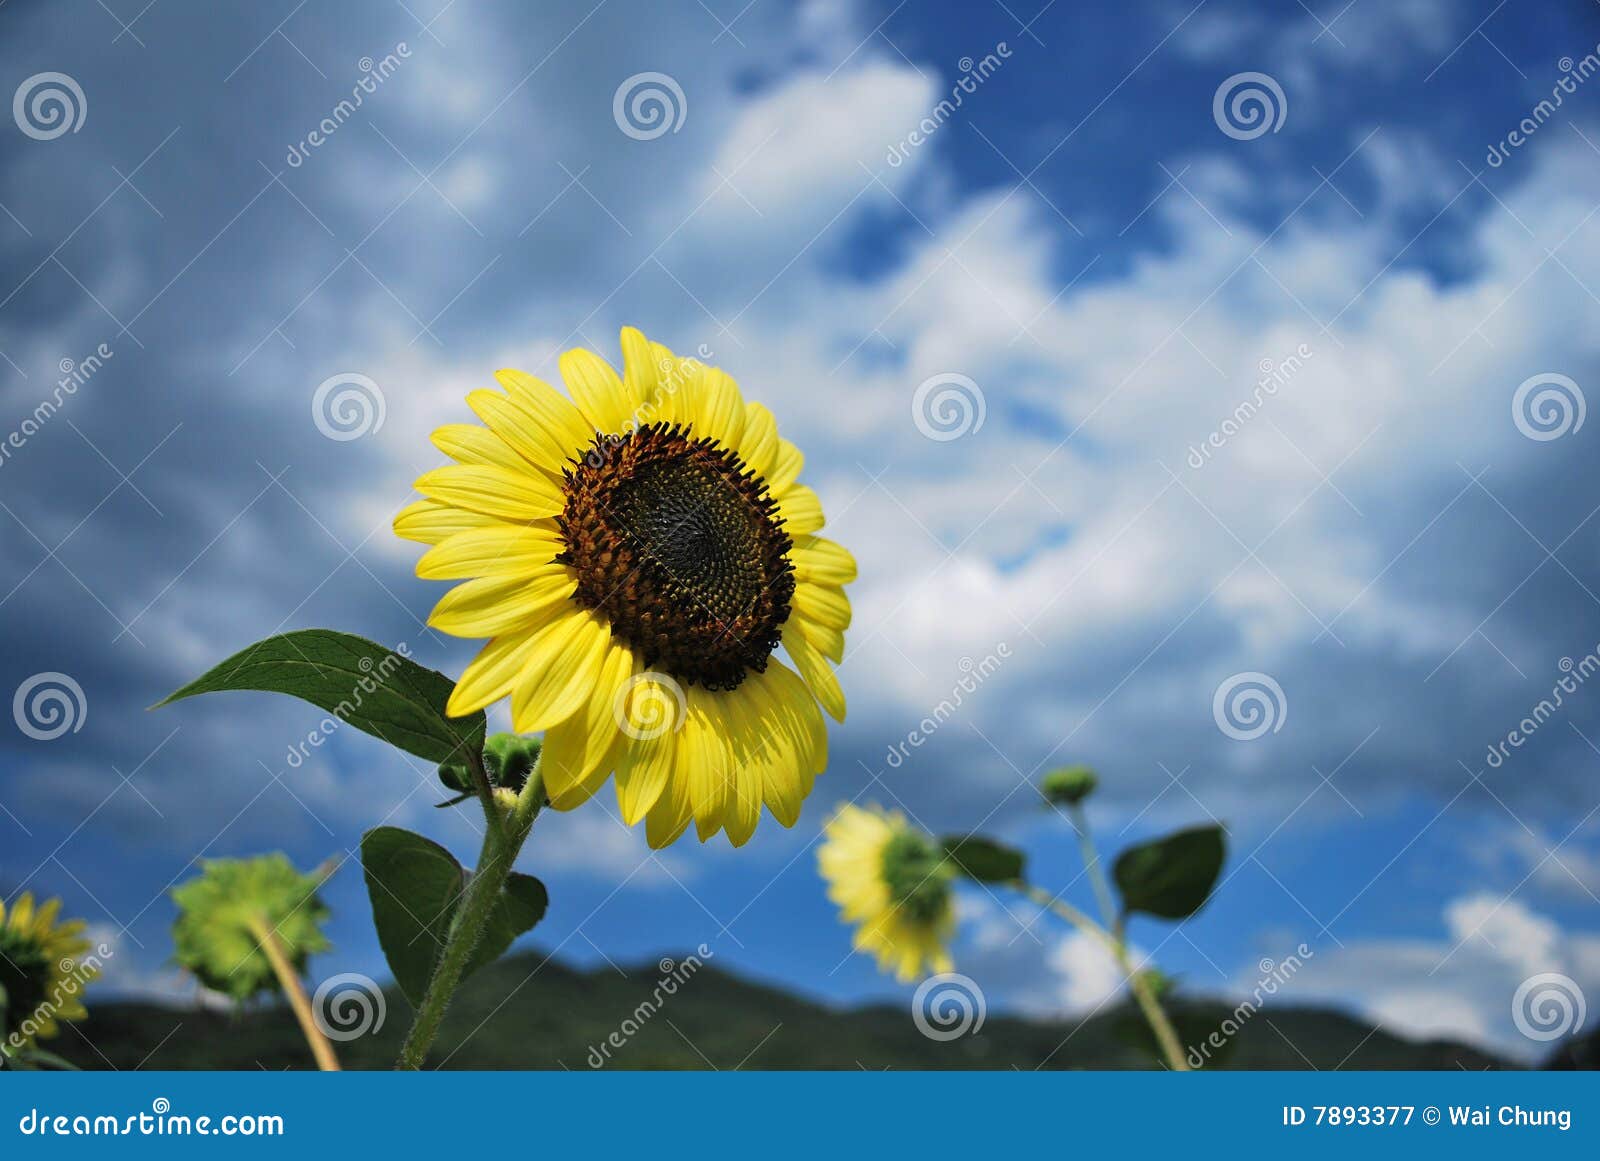 Printable Wind Blown Sunflower Template